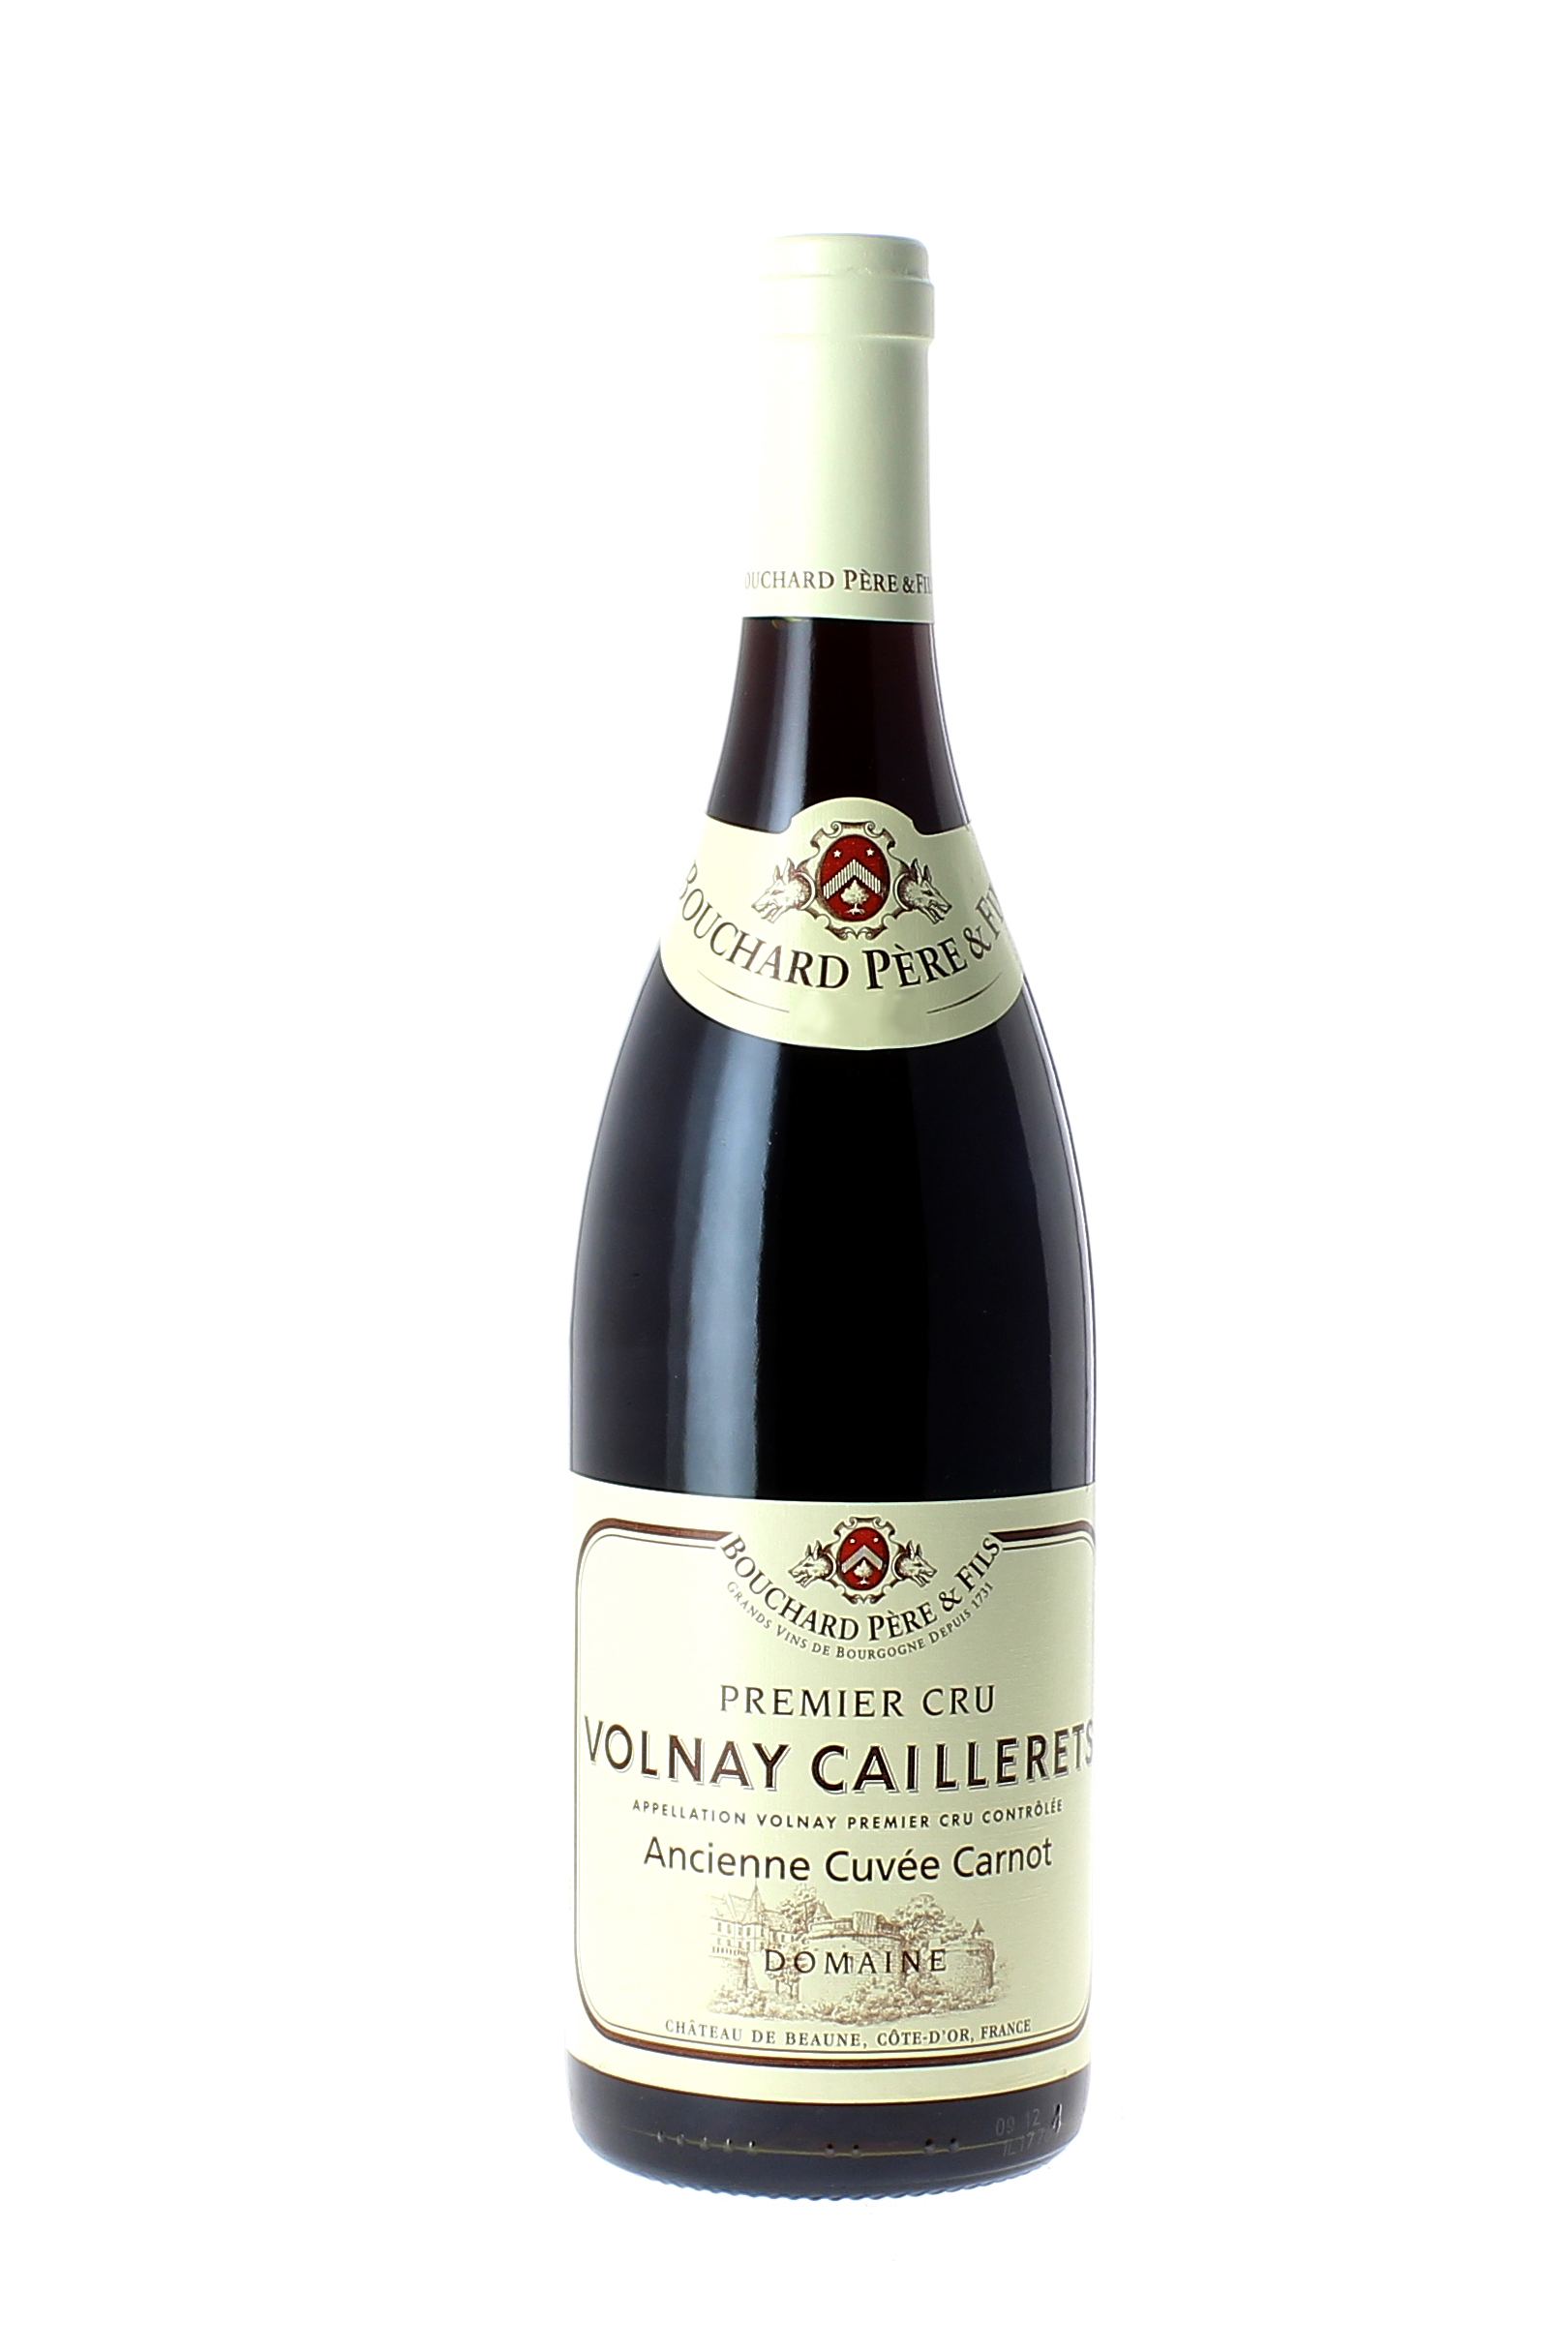 Volnay caillerets ancienne cuve carnot 2000  BOUCHARD Pre et fils, Bourgogne rouge